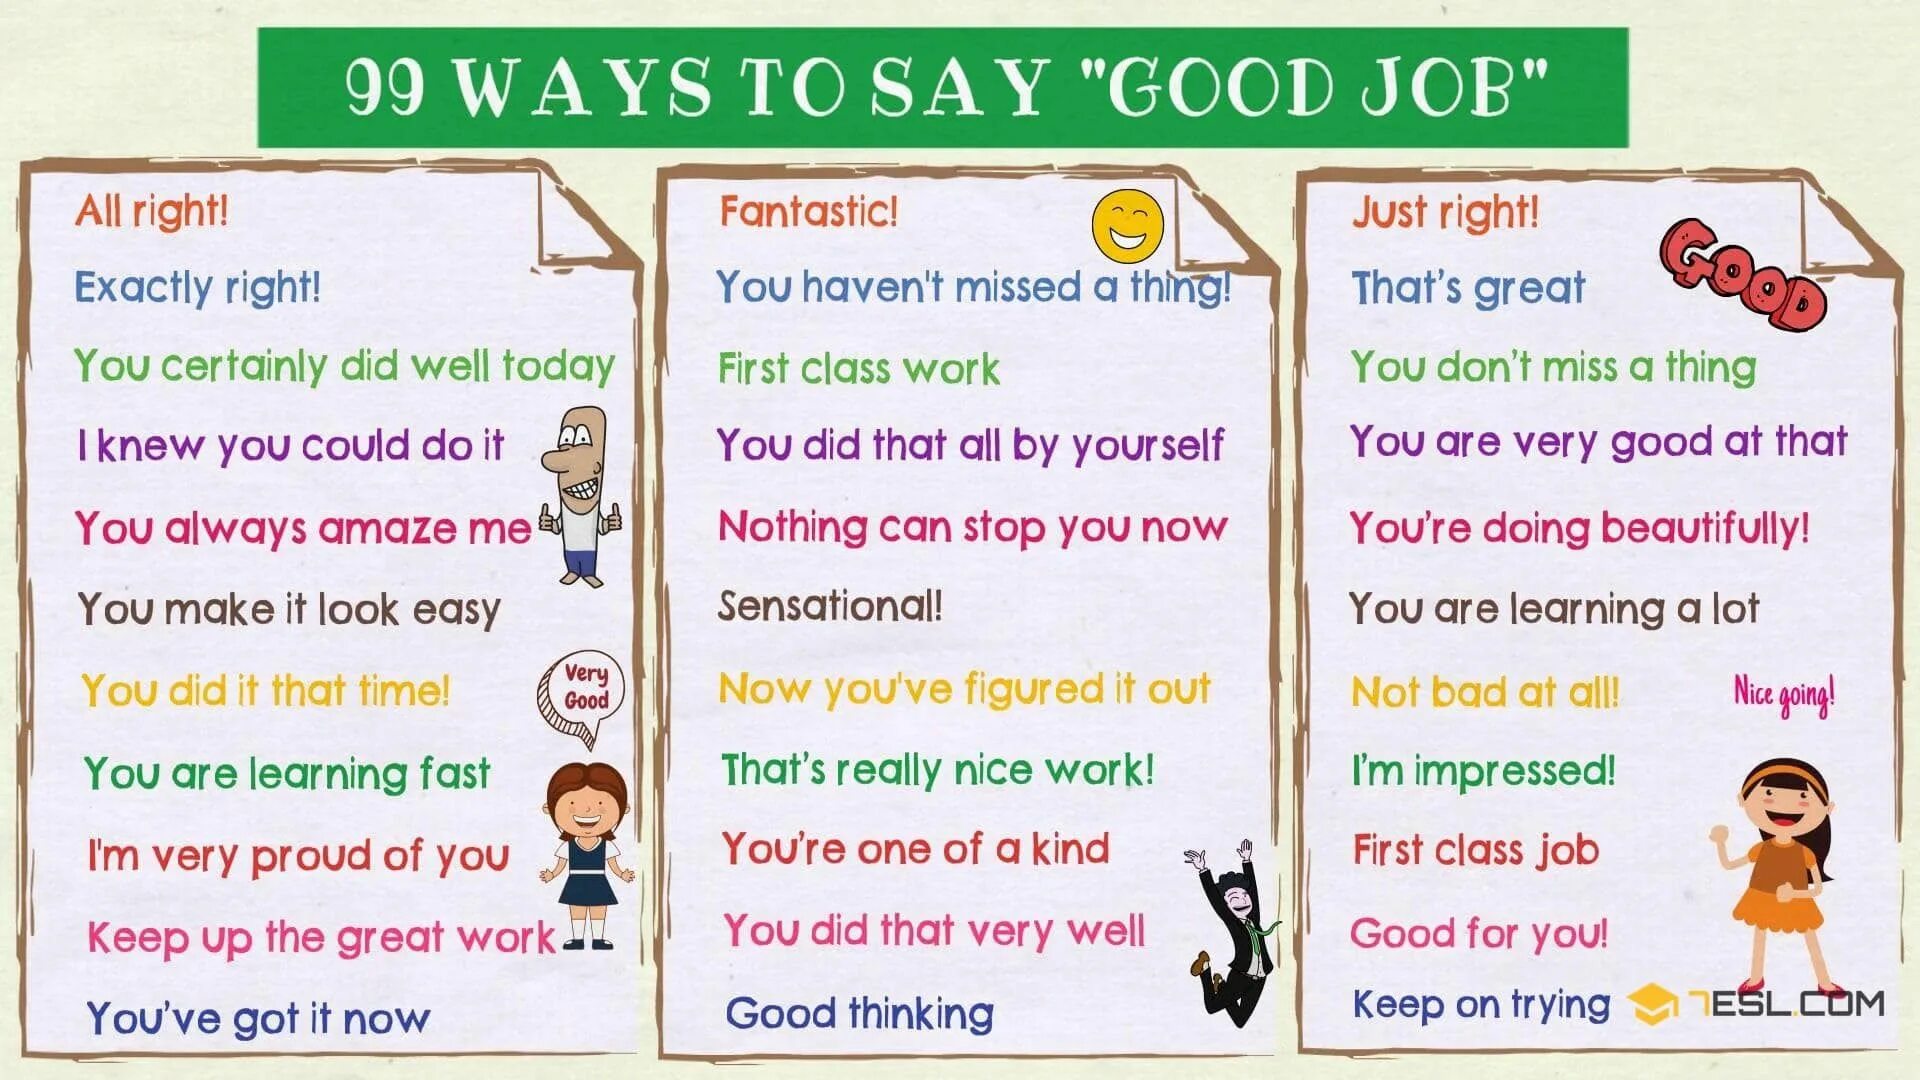 Good job синонимы. Ways to say good job. Ways to say great. Great синонимы на английском. Do to do nice want